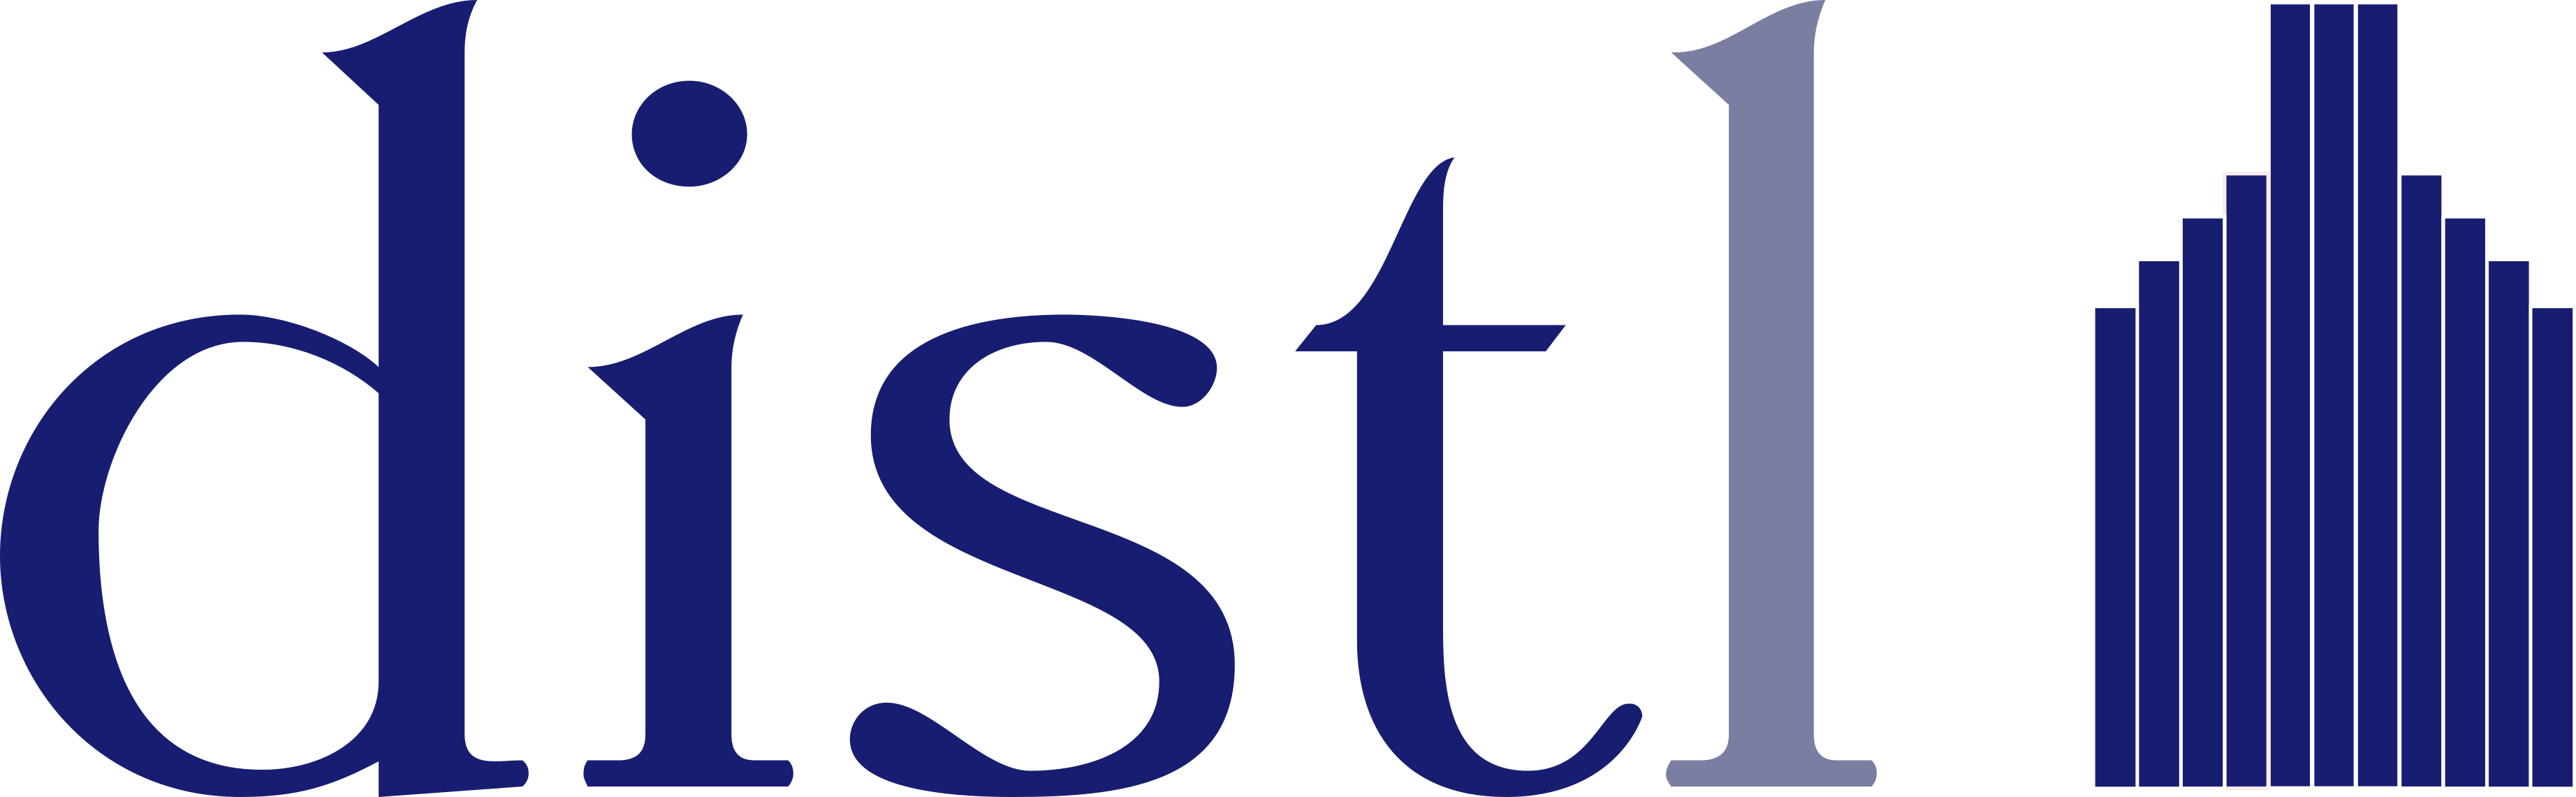 distl logo